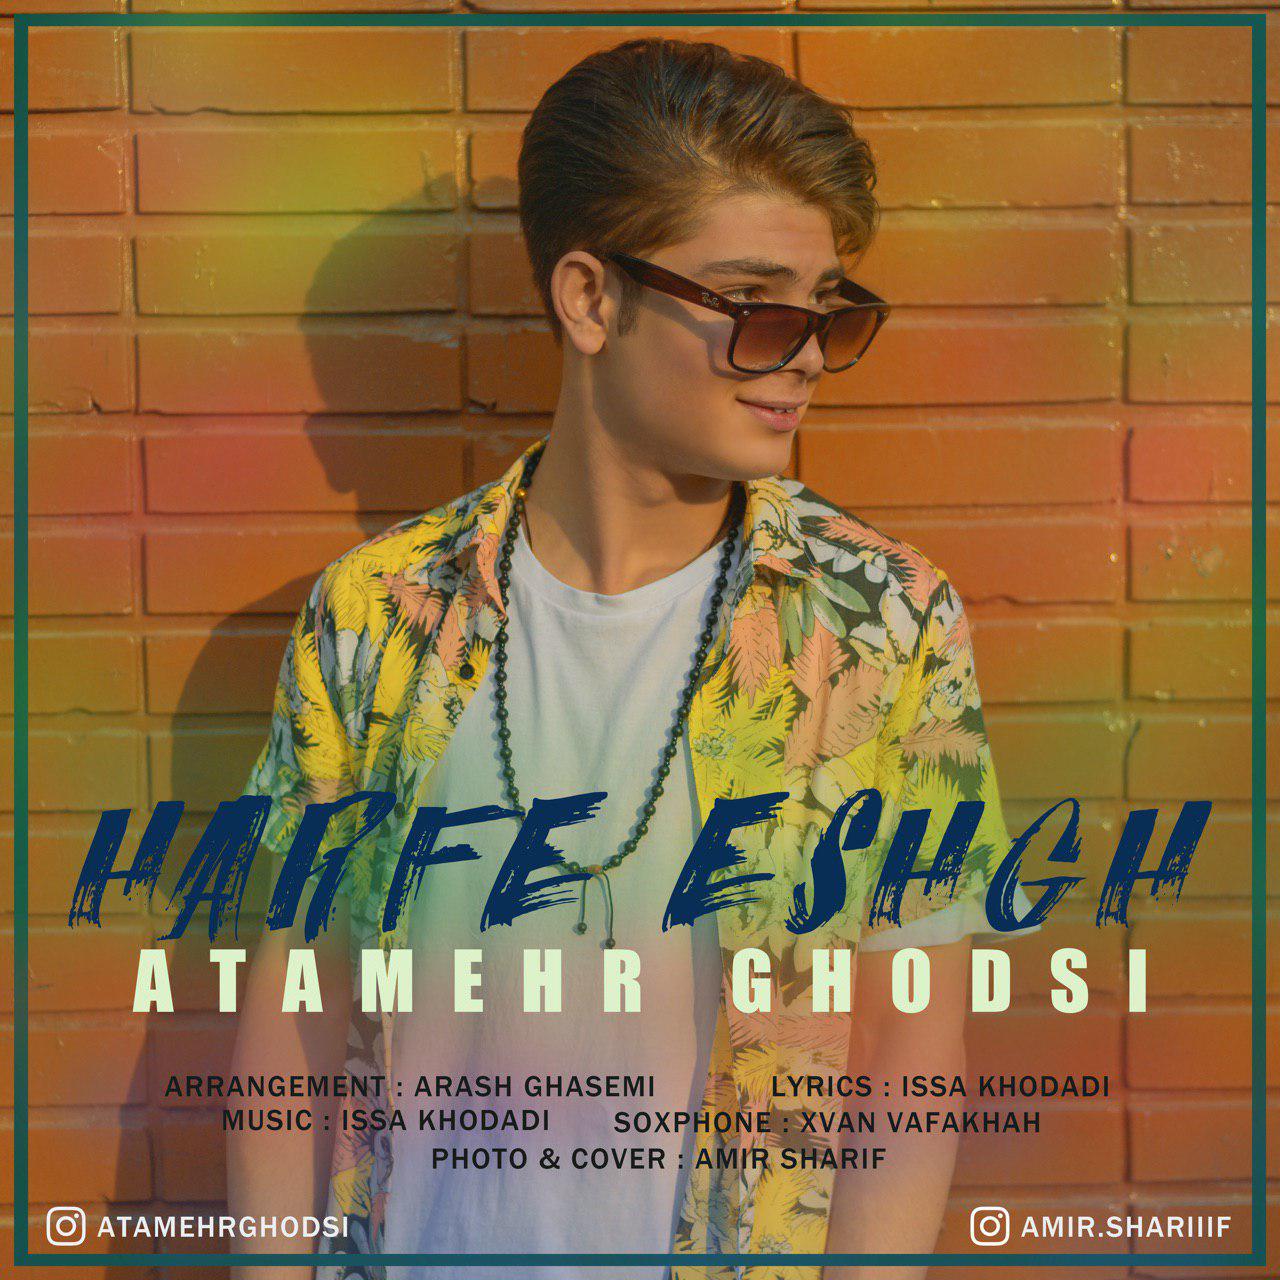  دانلود آهنگ جدید عطامهر قدسی - حرف عشق | Download New Music By Atamehr Ghodsi - Harfe Eshgh